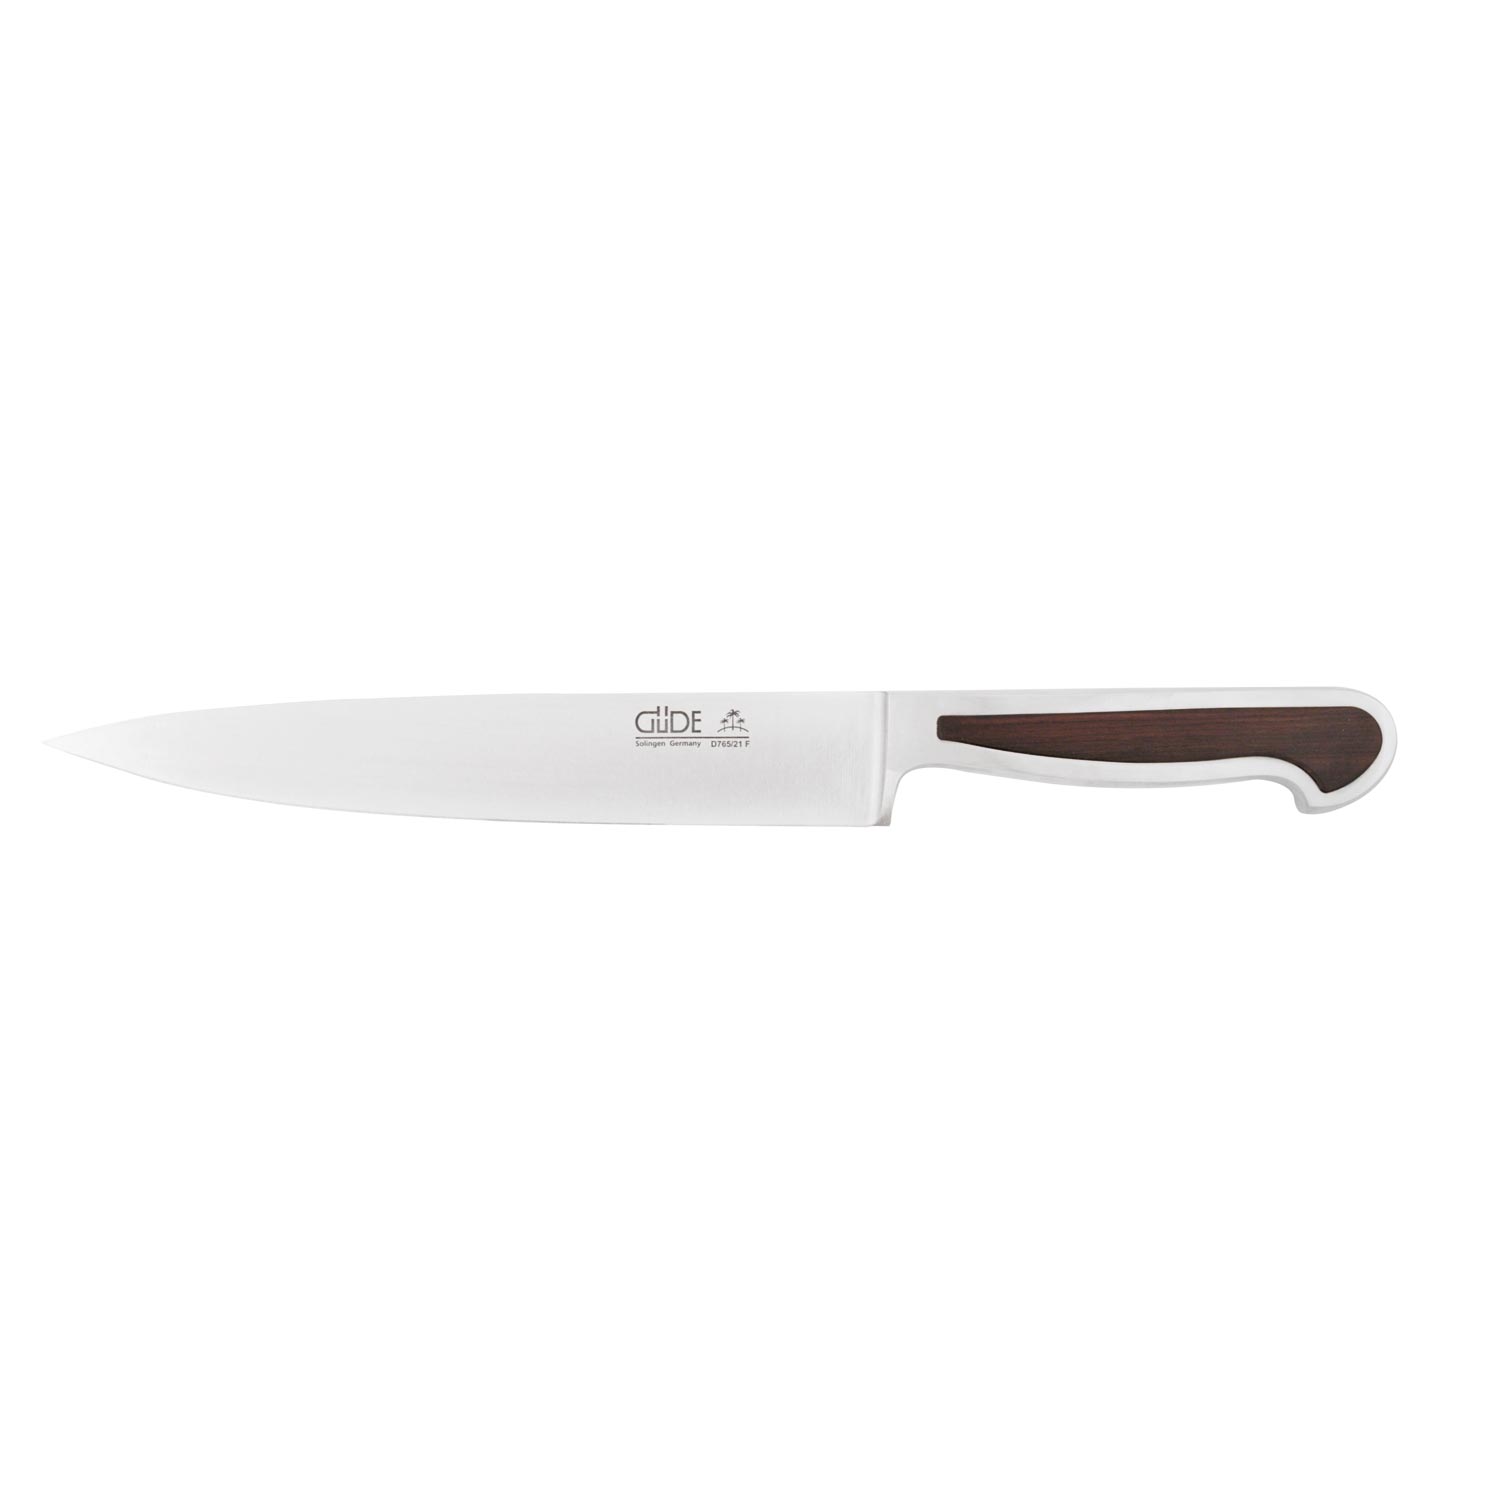 Филейный нож 21 см Delta Guede | https://grandposuda.com.ua